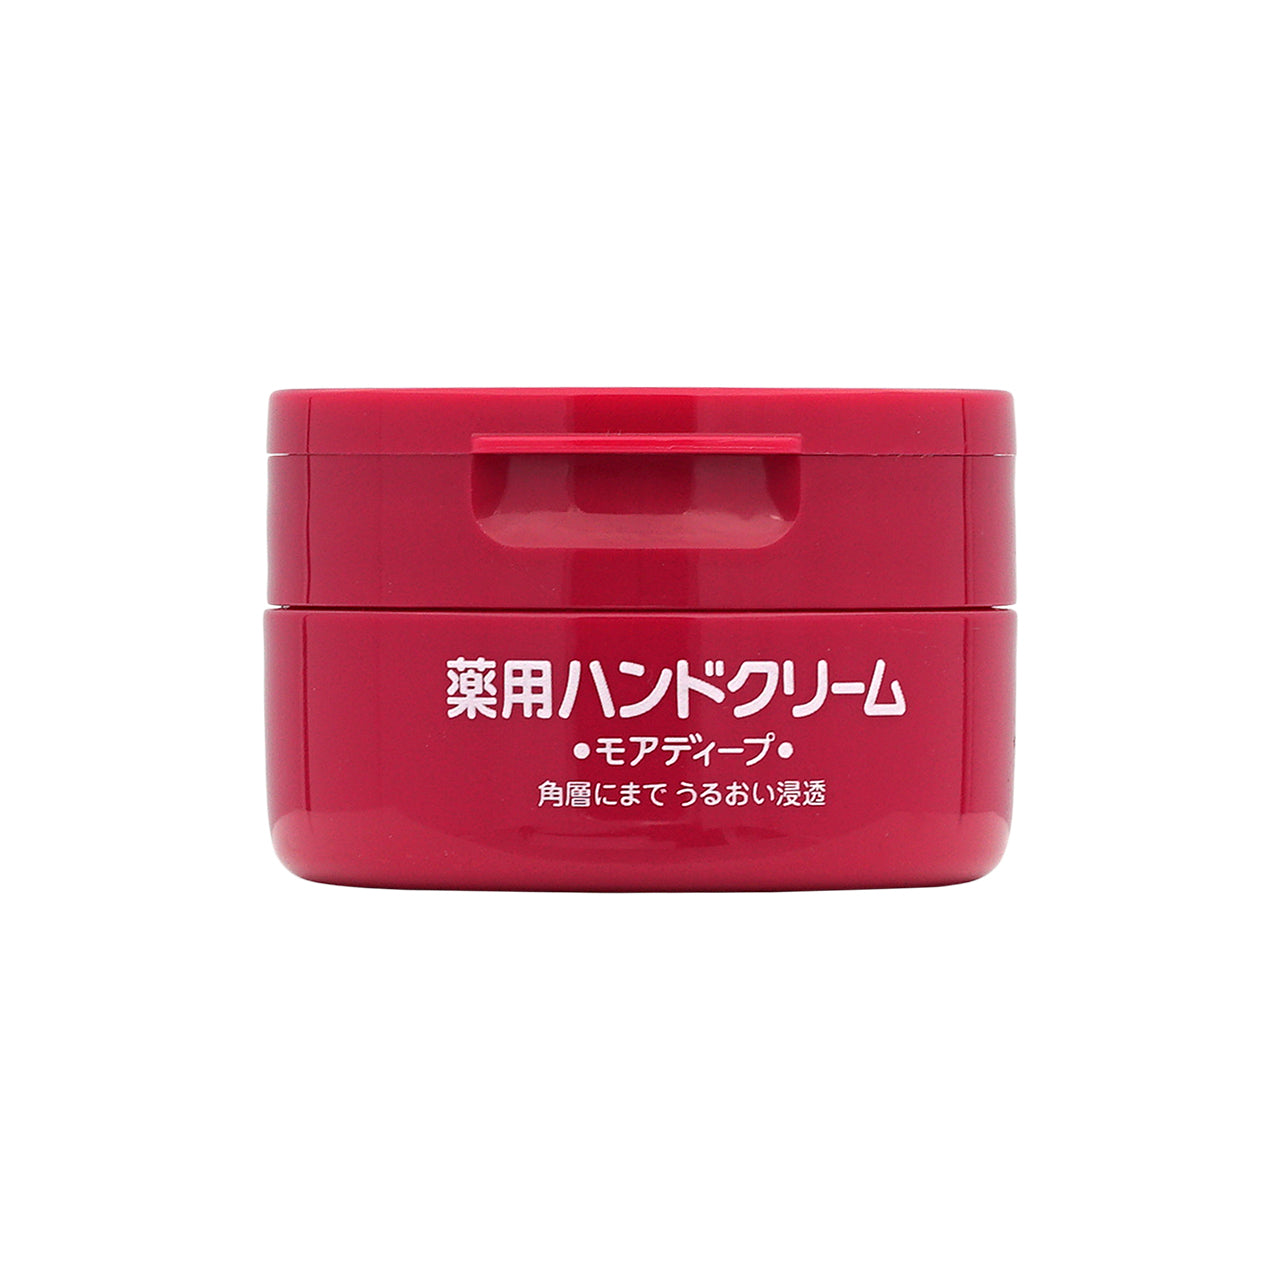 Shiseido Medicated Hand Cream